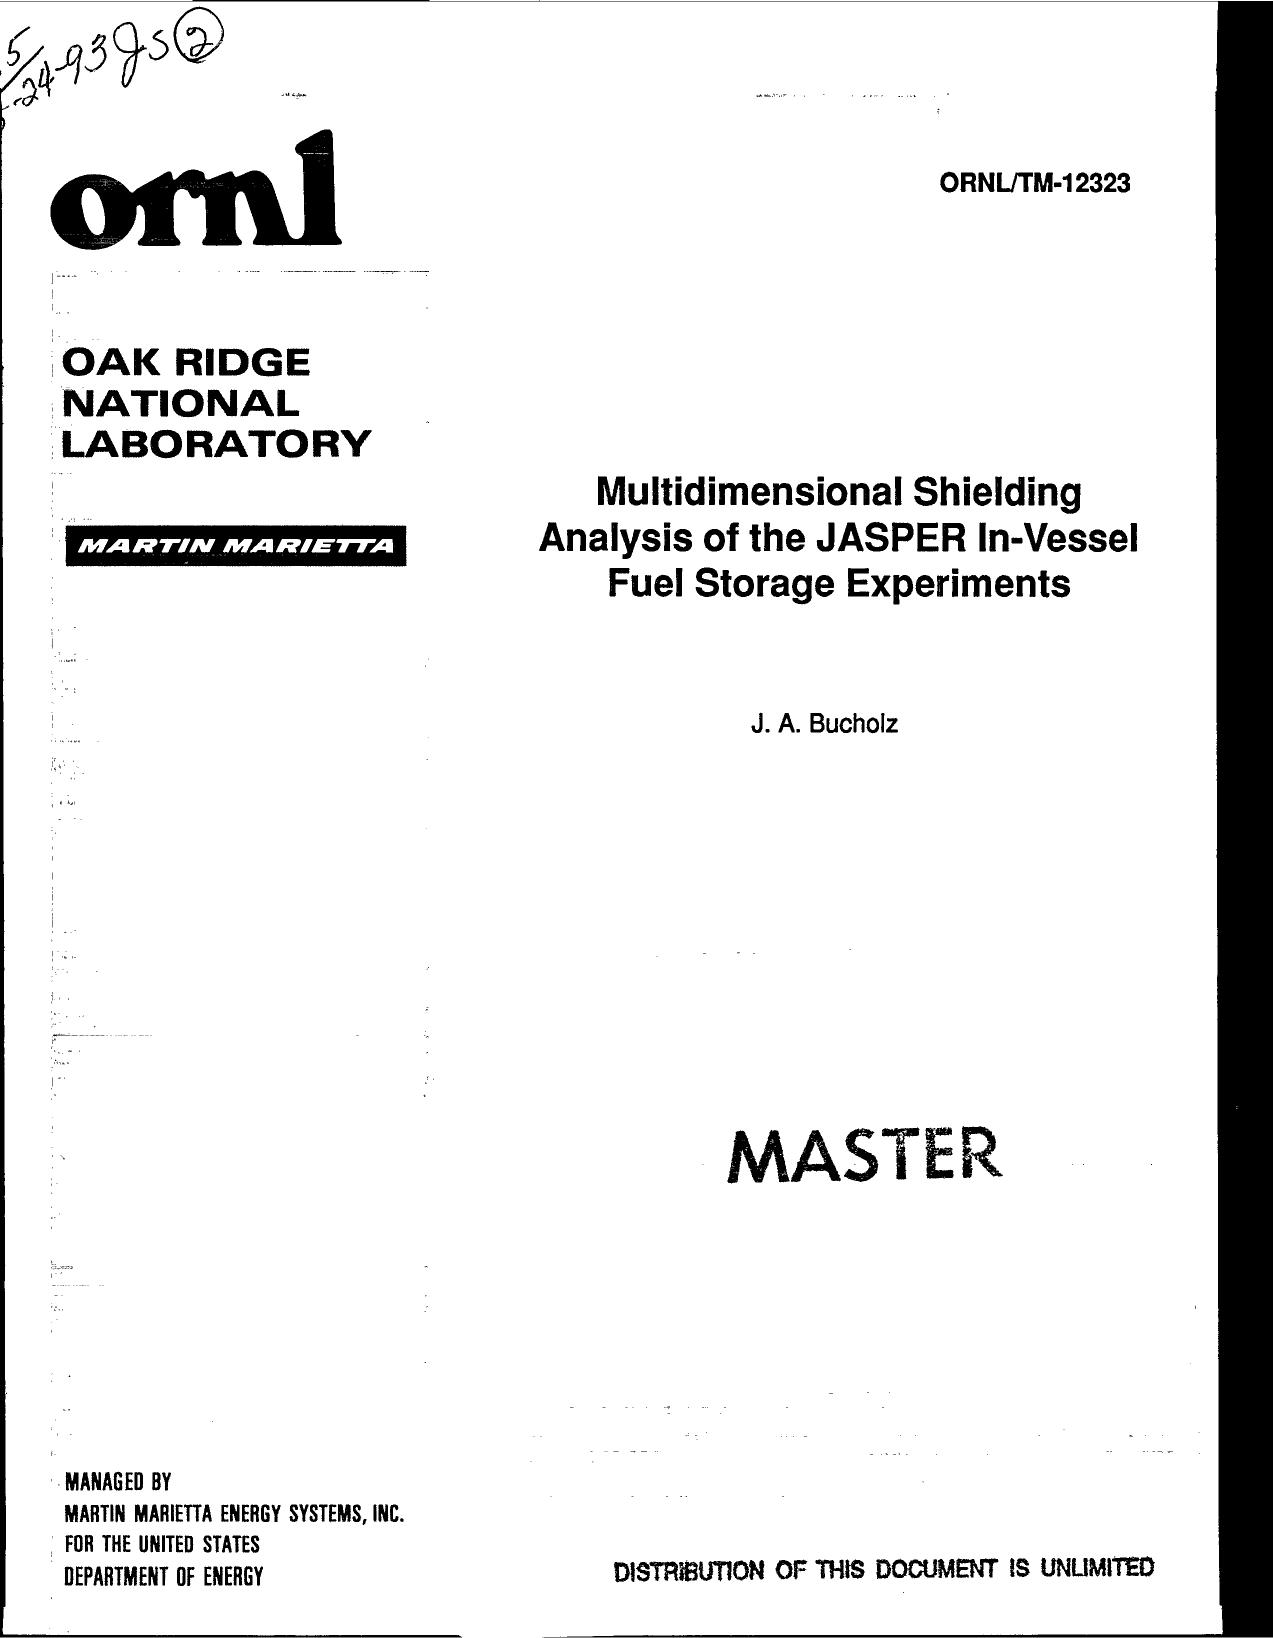 Multidimensional shielding analysis of the JASPER in-vessel fuel storage experiments (Bucholz etc.)—